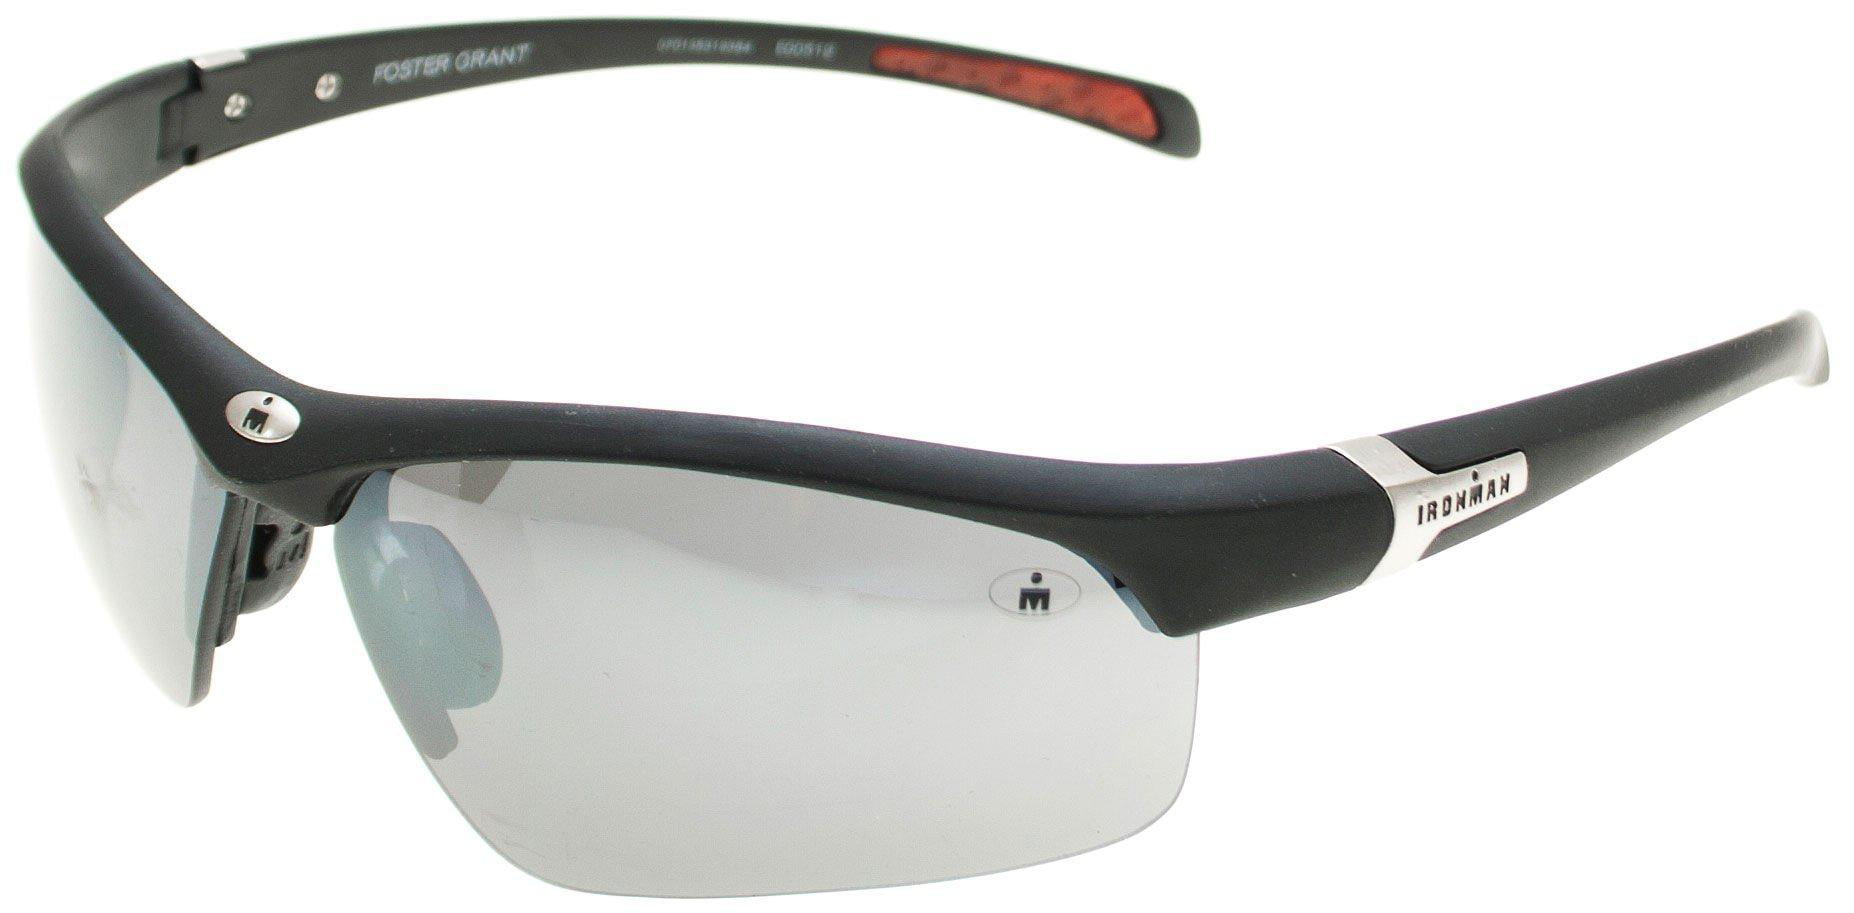 IronMan Sunglasses Ironflex 3 Gray and Orange Lightweight Frames 